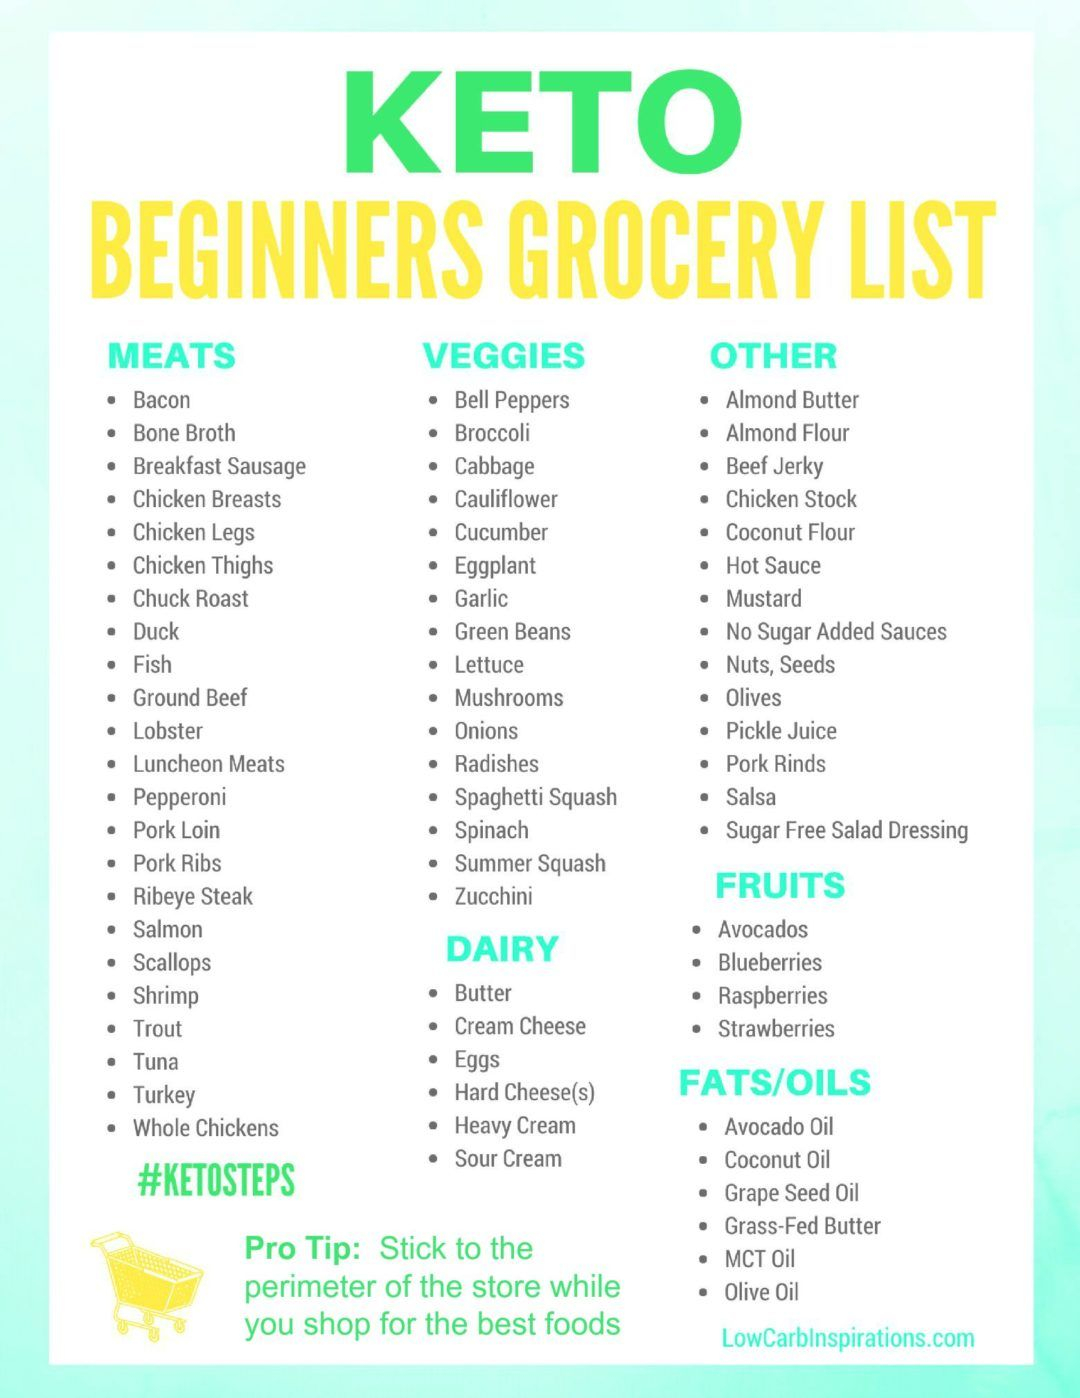 Keto Grocery List For Beginners Keto Diet Recipes Keto Diet Food 